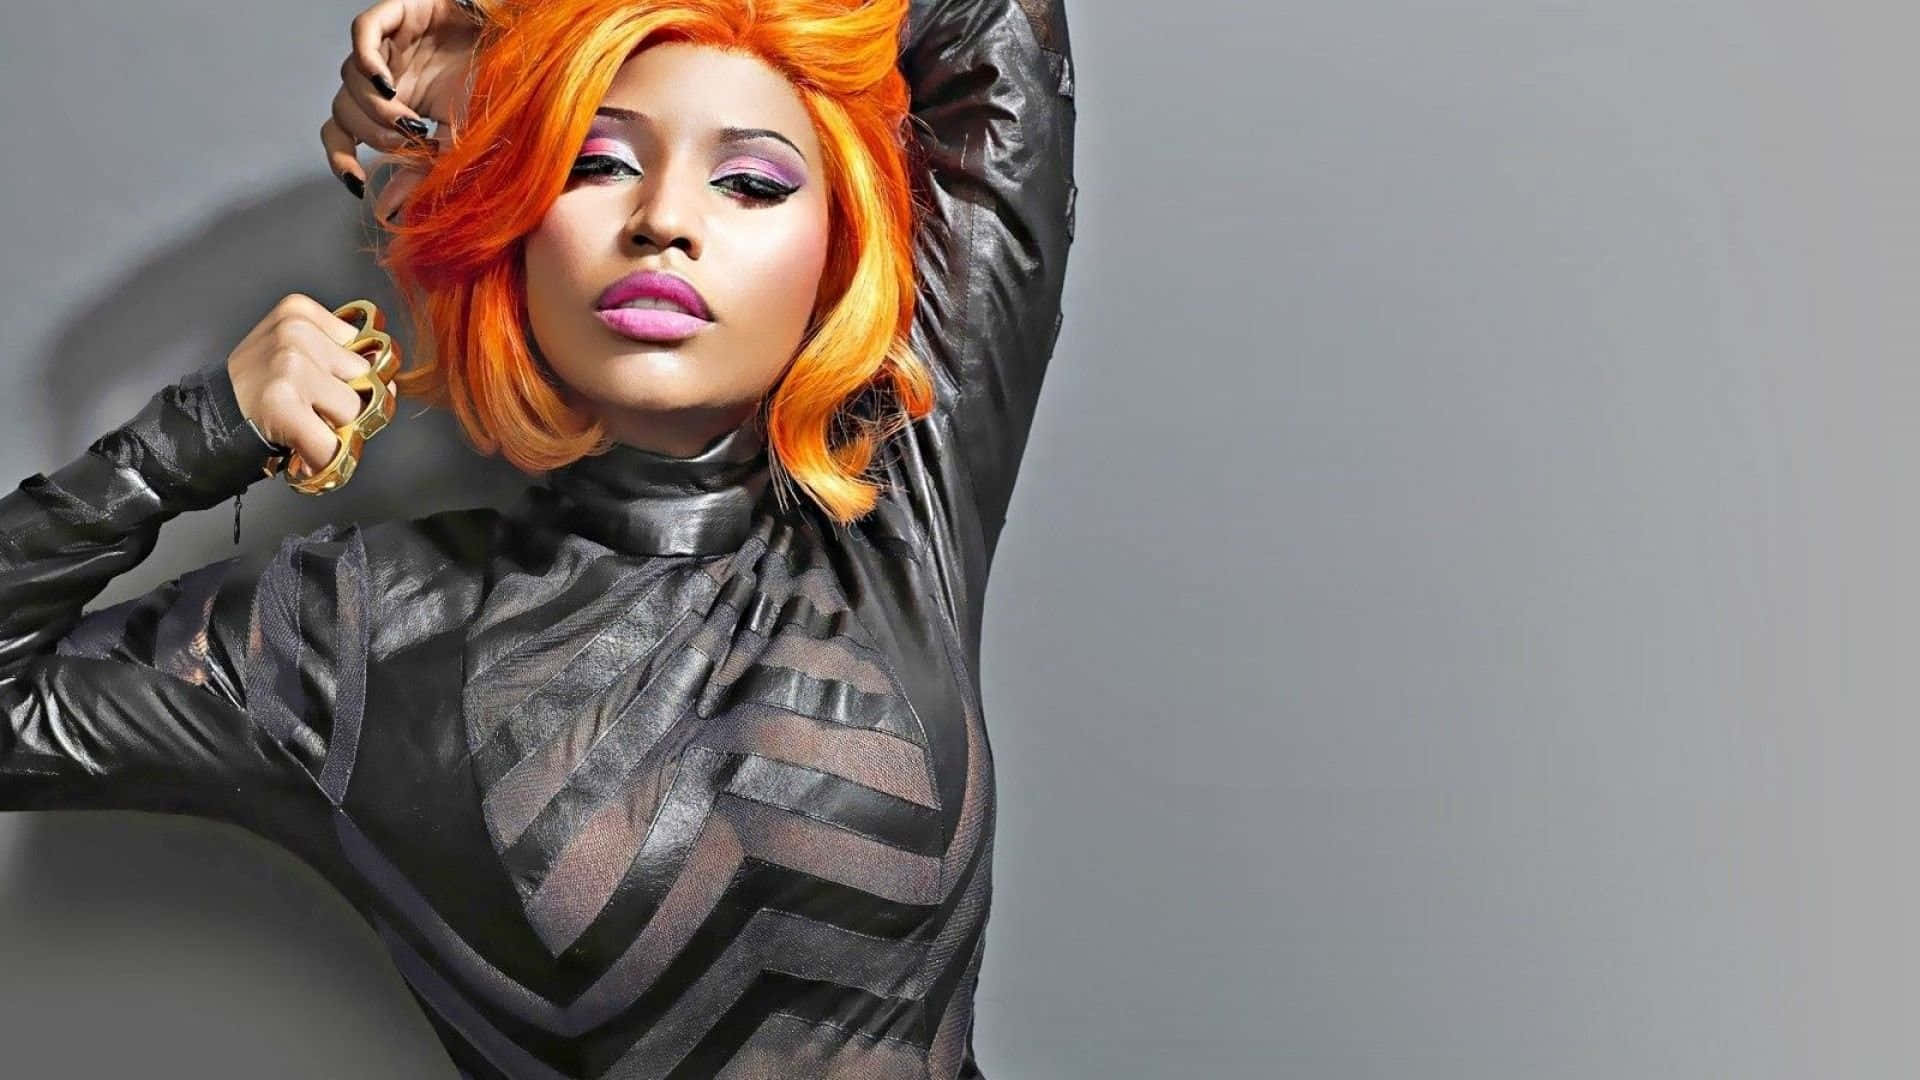 Nicki Minaj striking a pose on stage